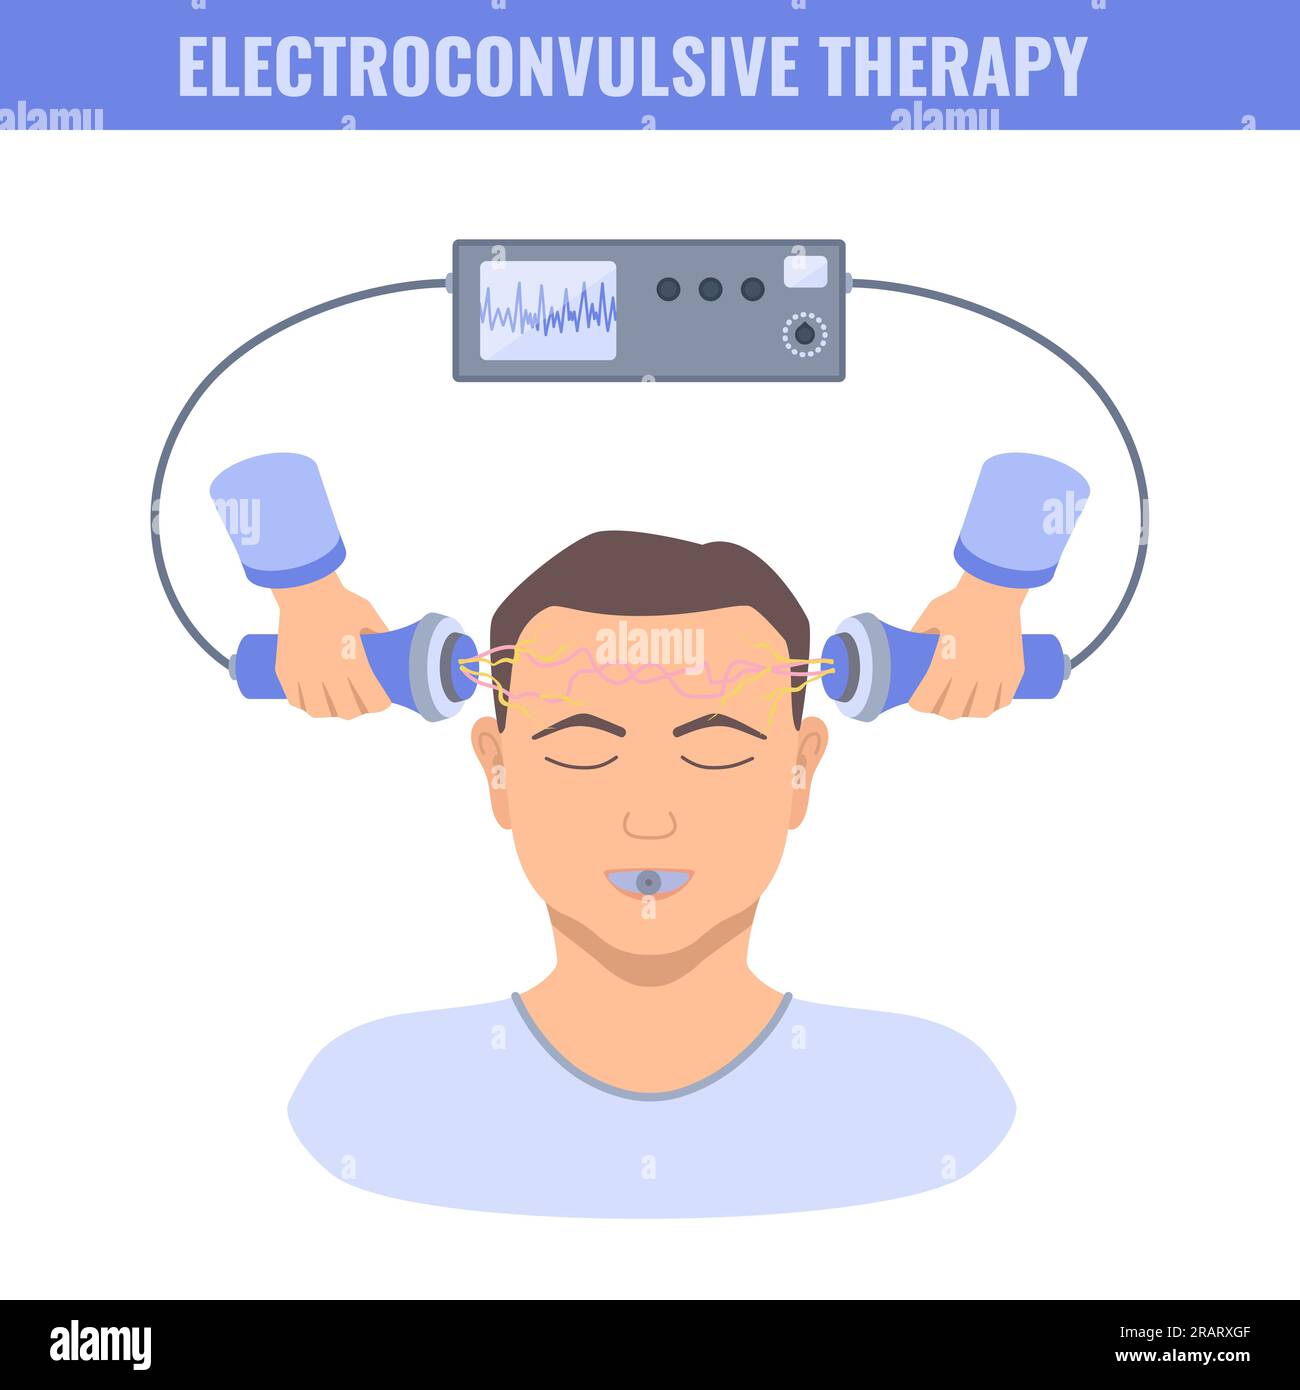 https://c8.alamy.com/comp/2RARXGF/ect-electroconvulsive-therapy-for-severe-depression-treatment-2RARXGF.jpg